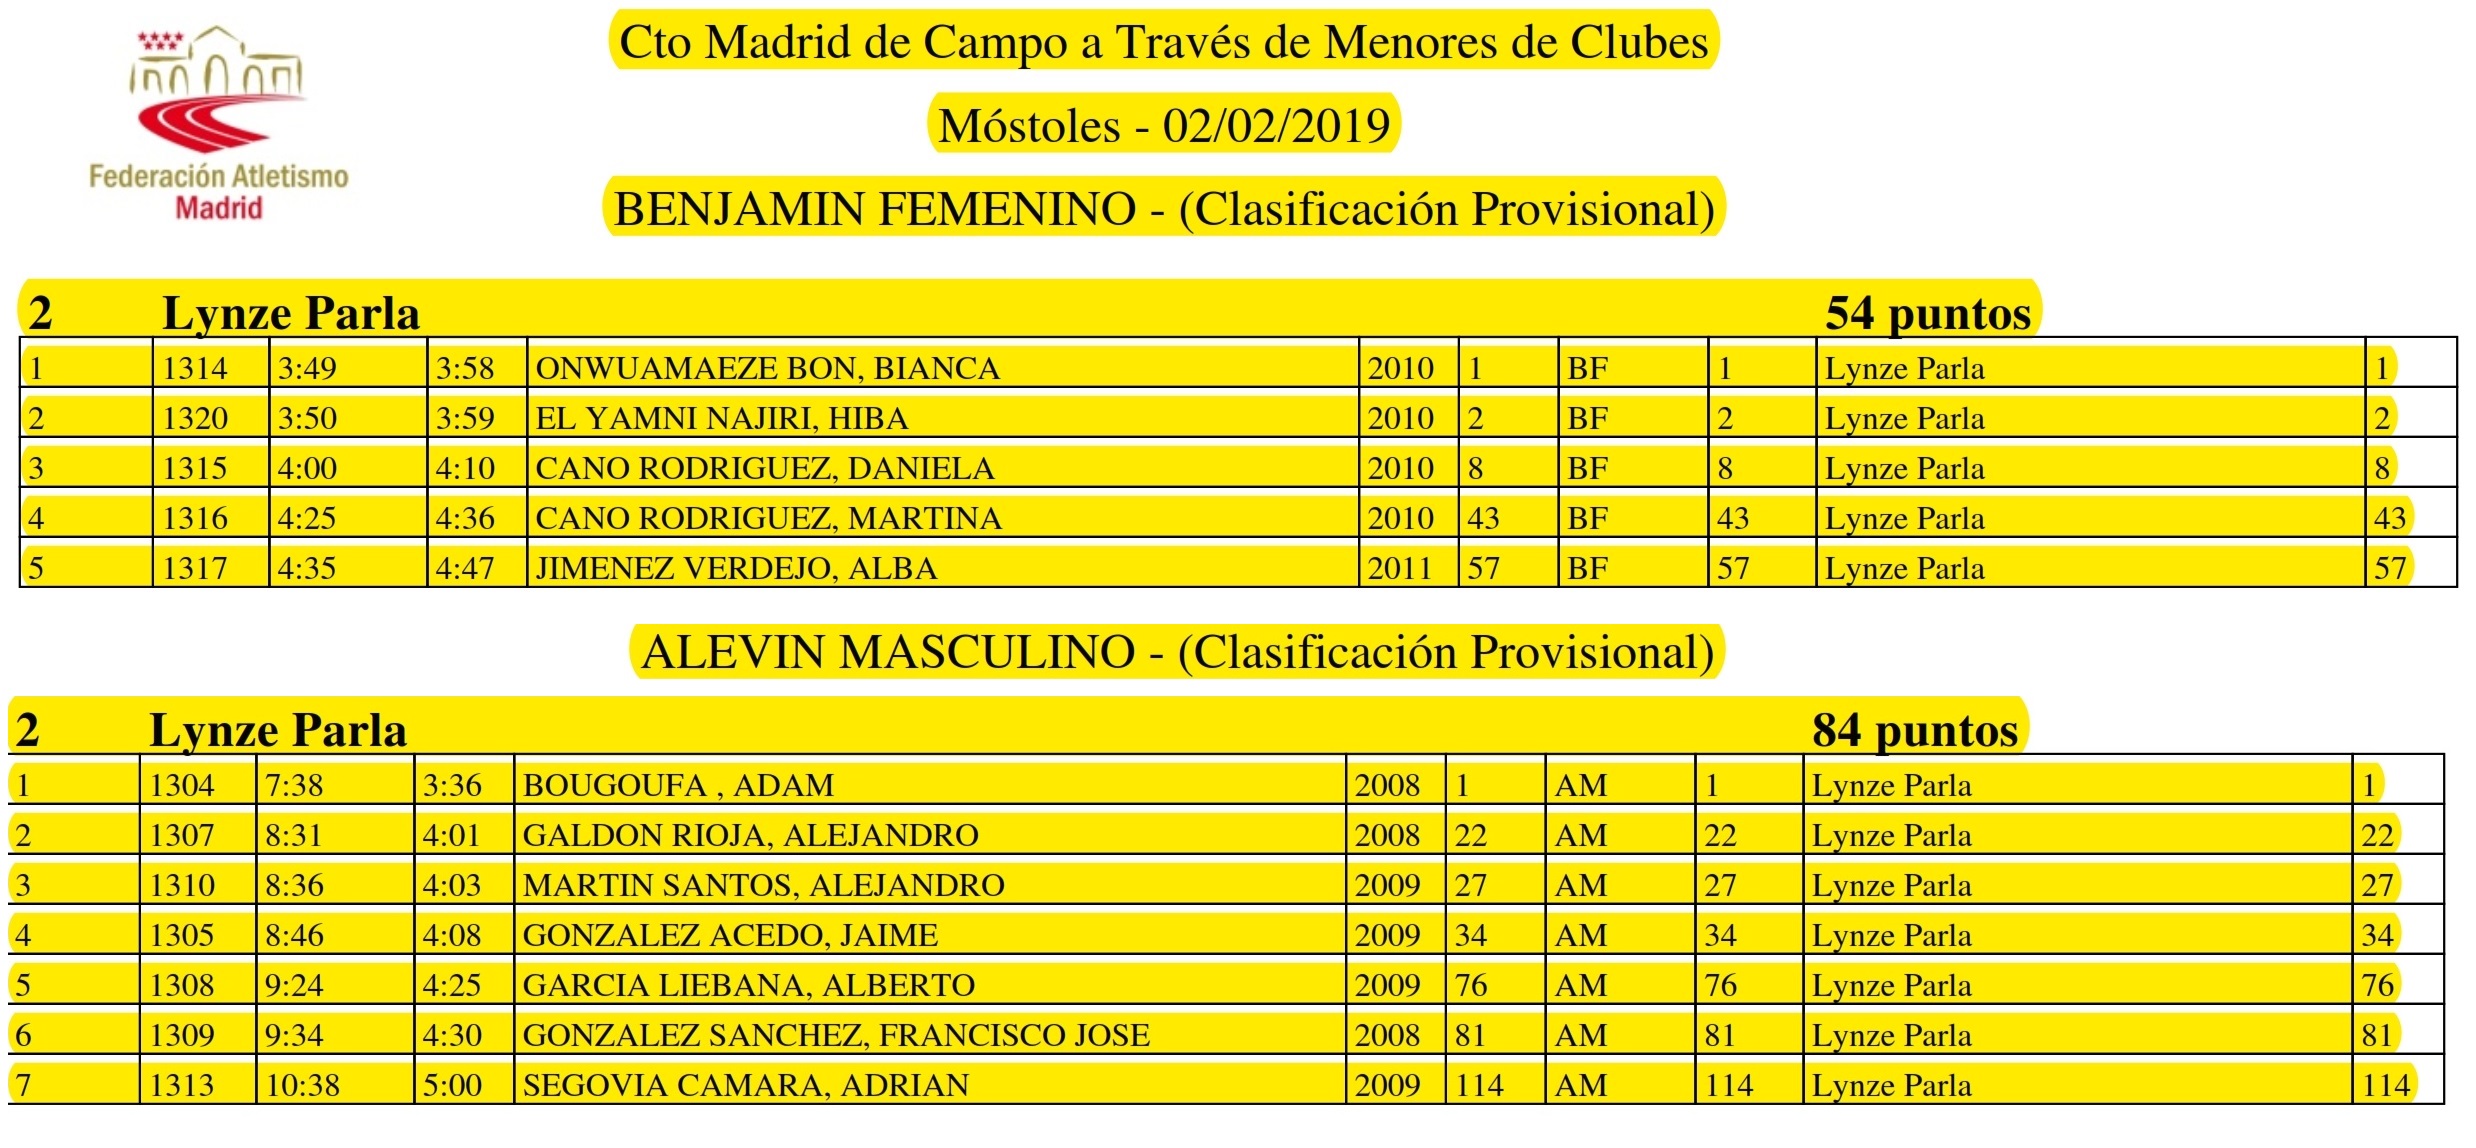 2018.02.02 CTO MADRID CROSS CLUBES MENORES MOSTOLES 003